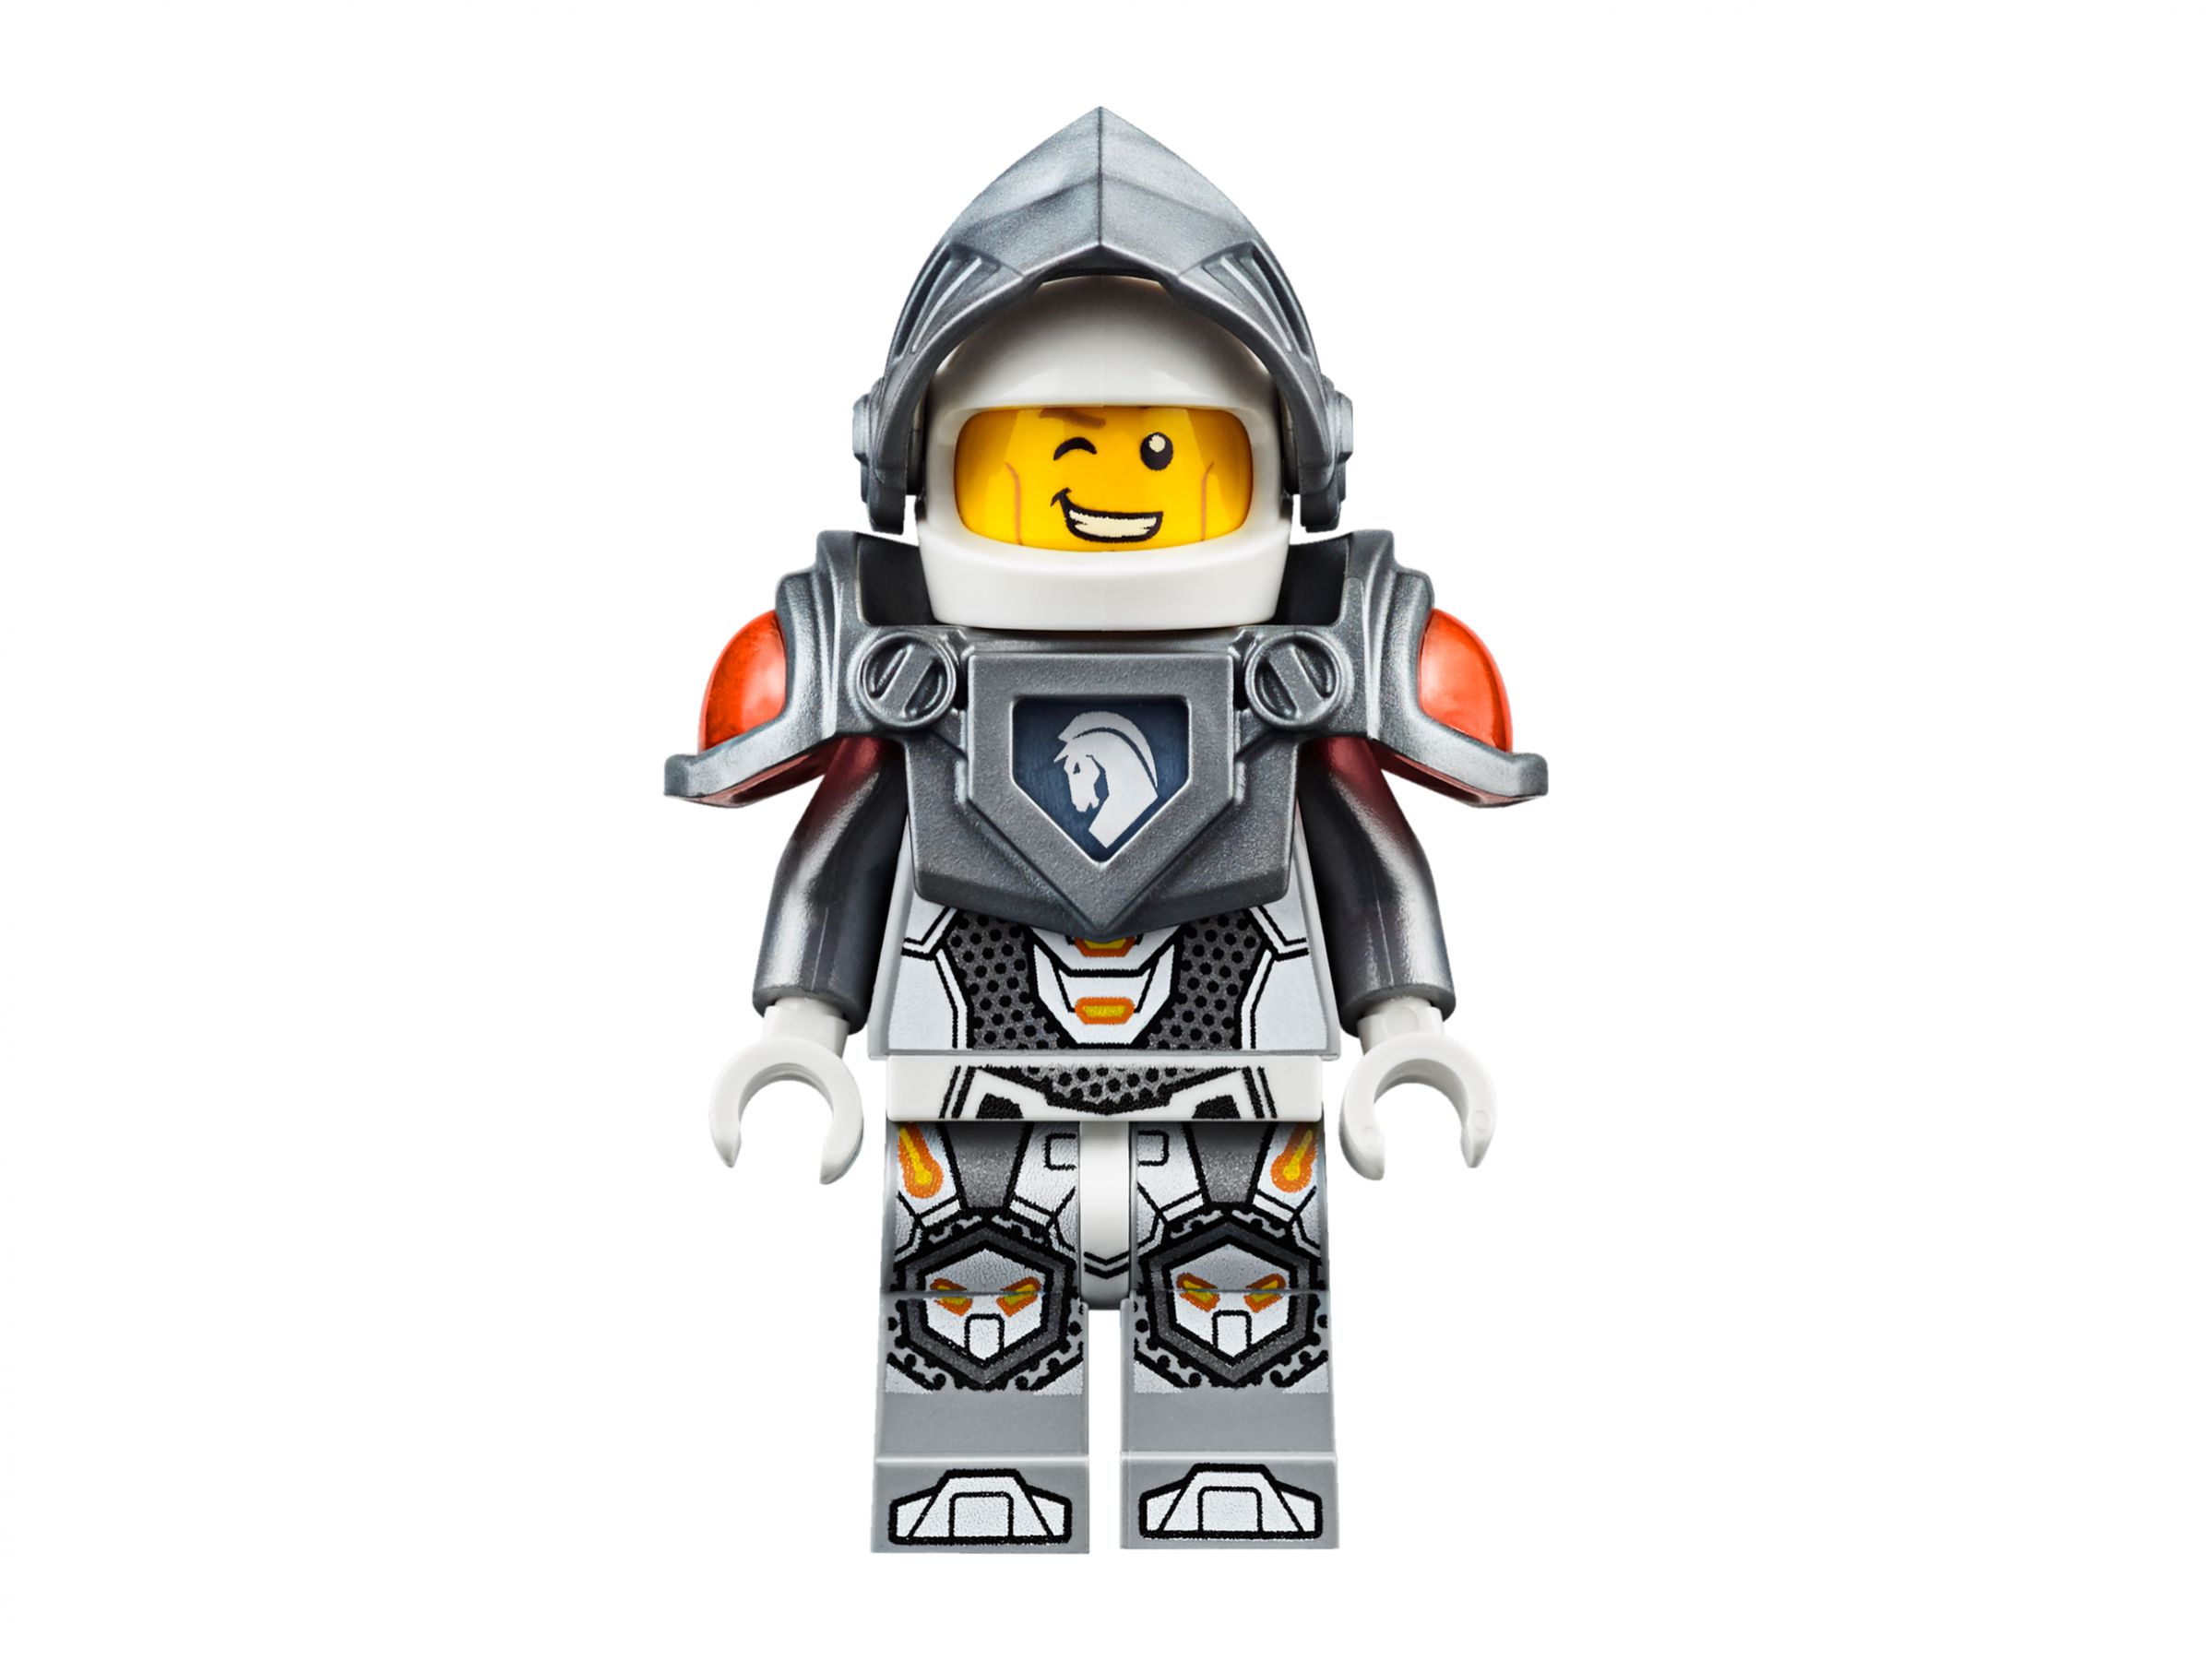 LEGO Nexo Knights 70323 Jestros Vulkanfestung LEGO_70323_alt8.jpg